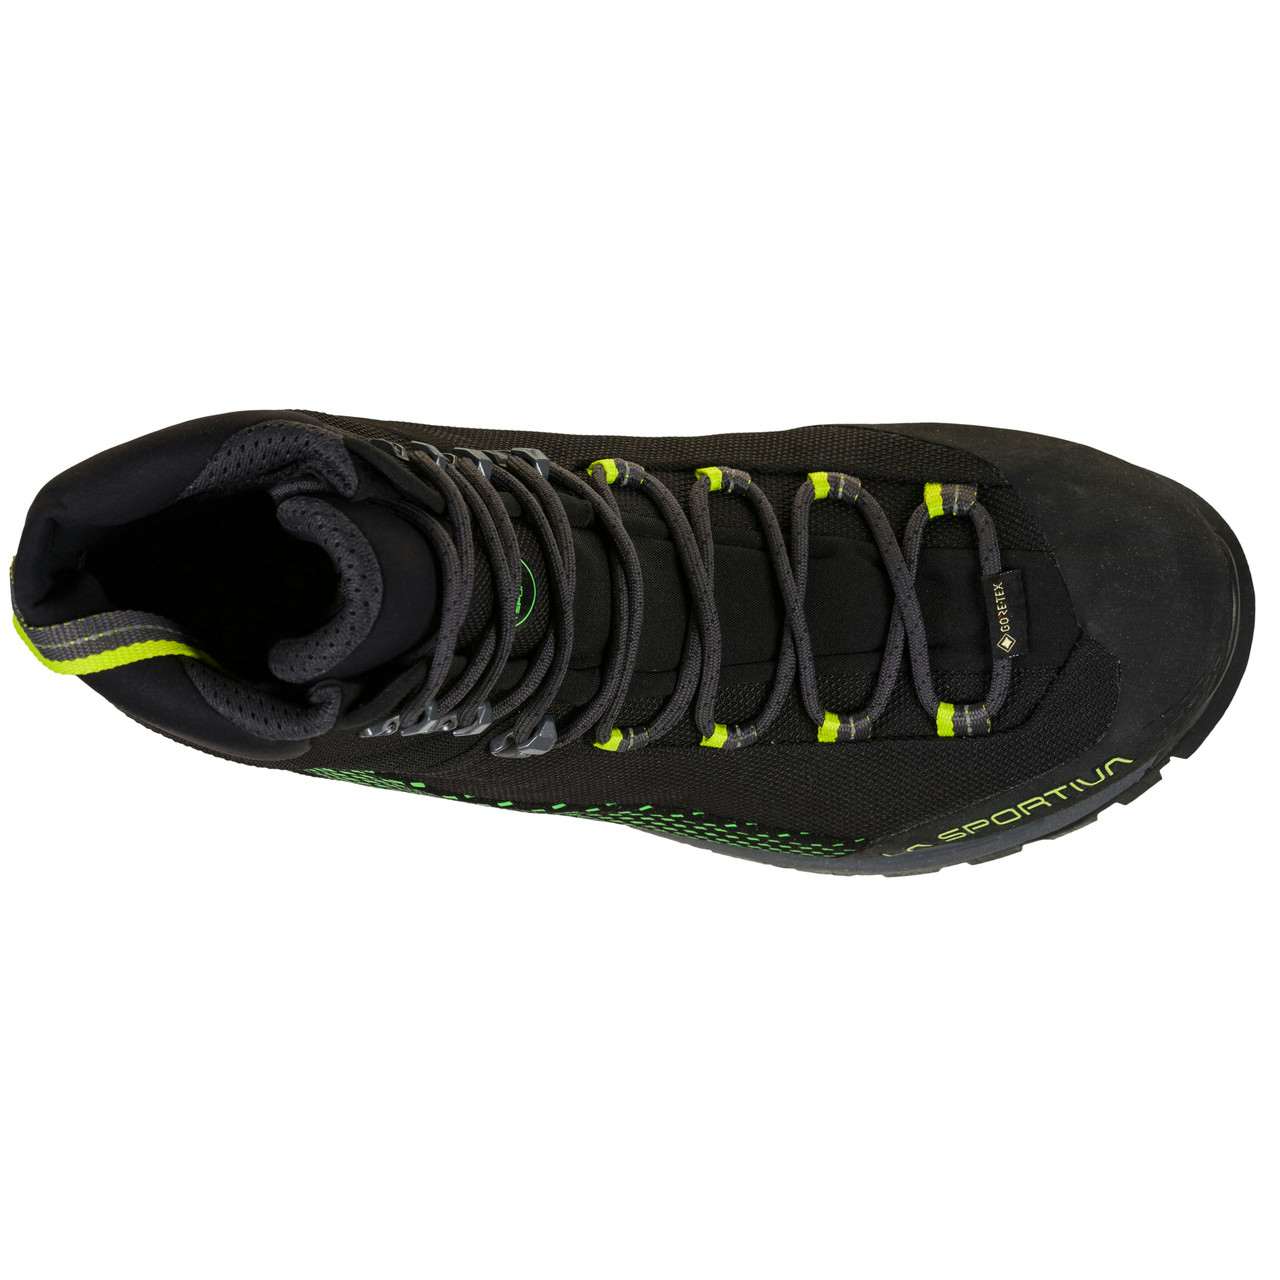 Trango TRK Gore-Tex Light Trail Shoes Black/Flash Green